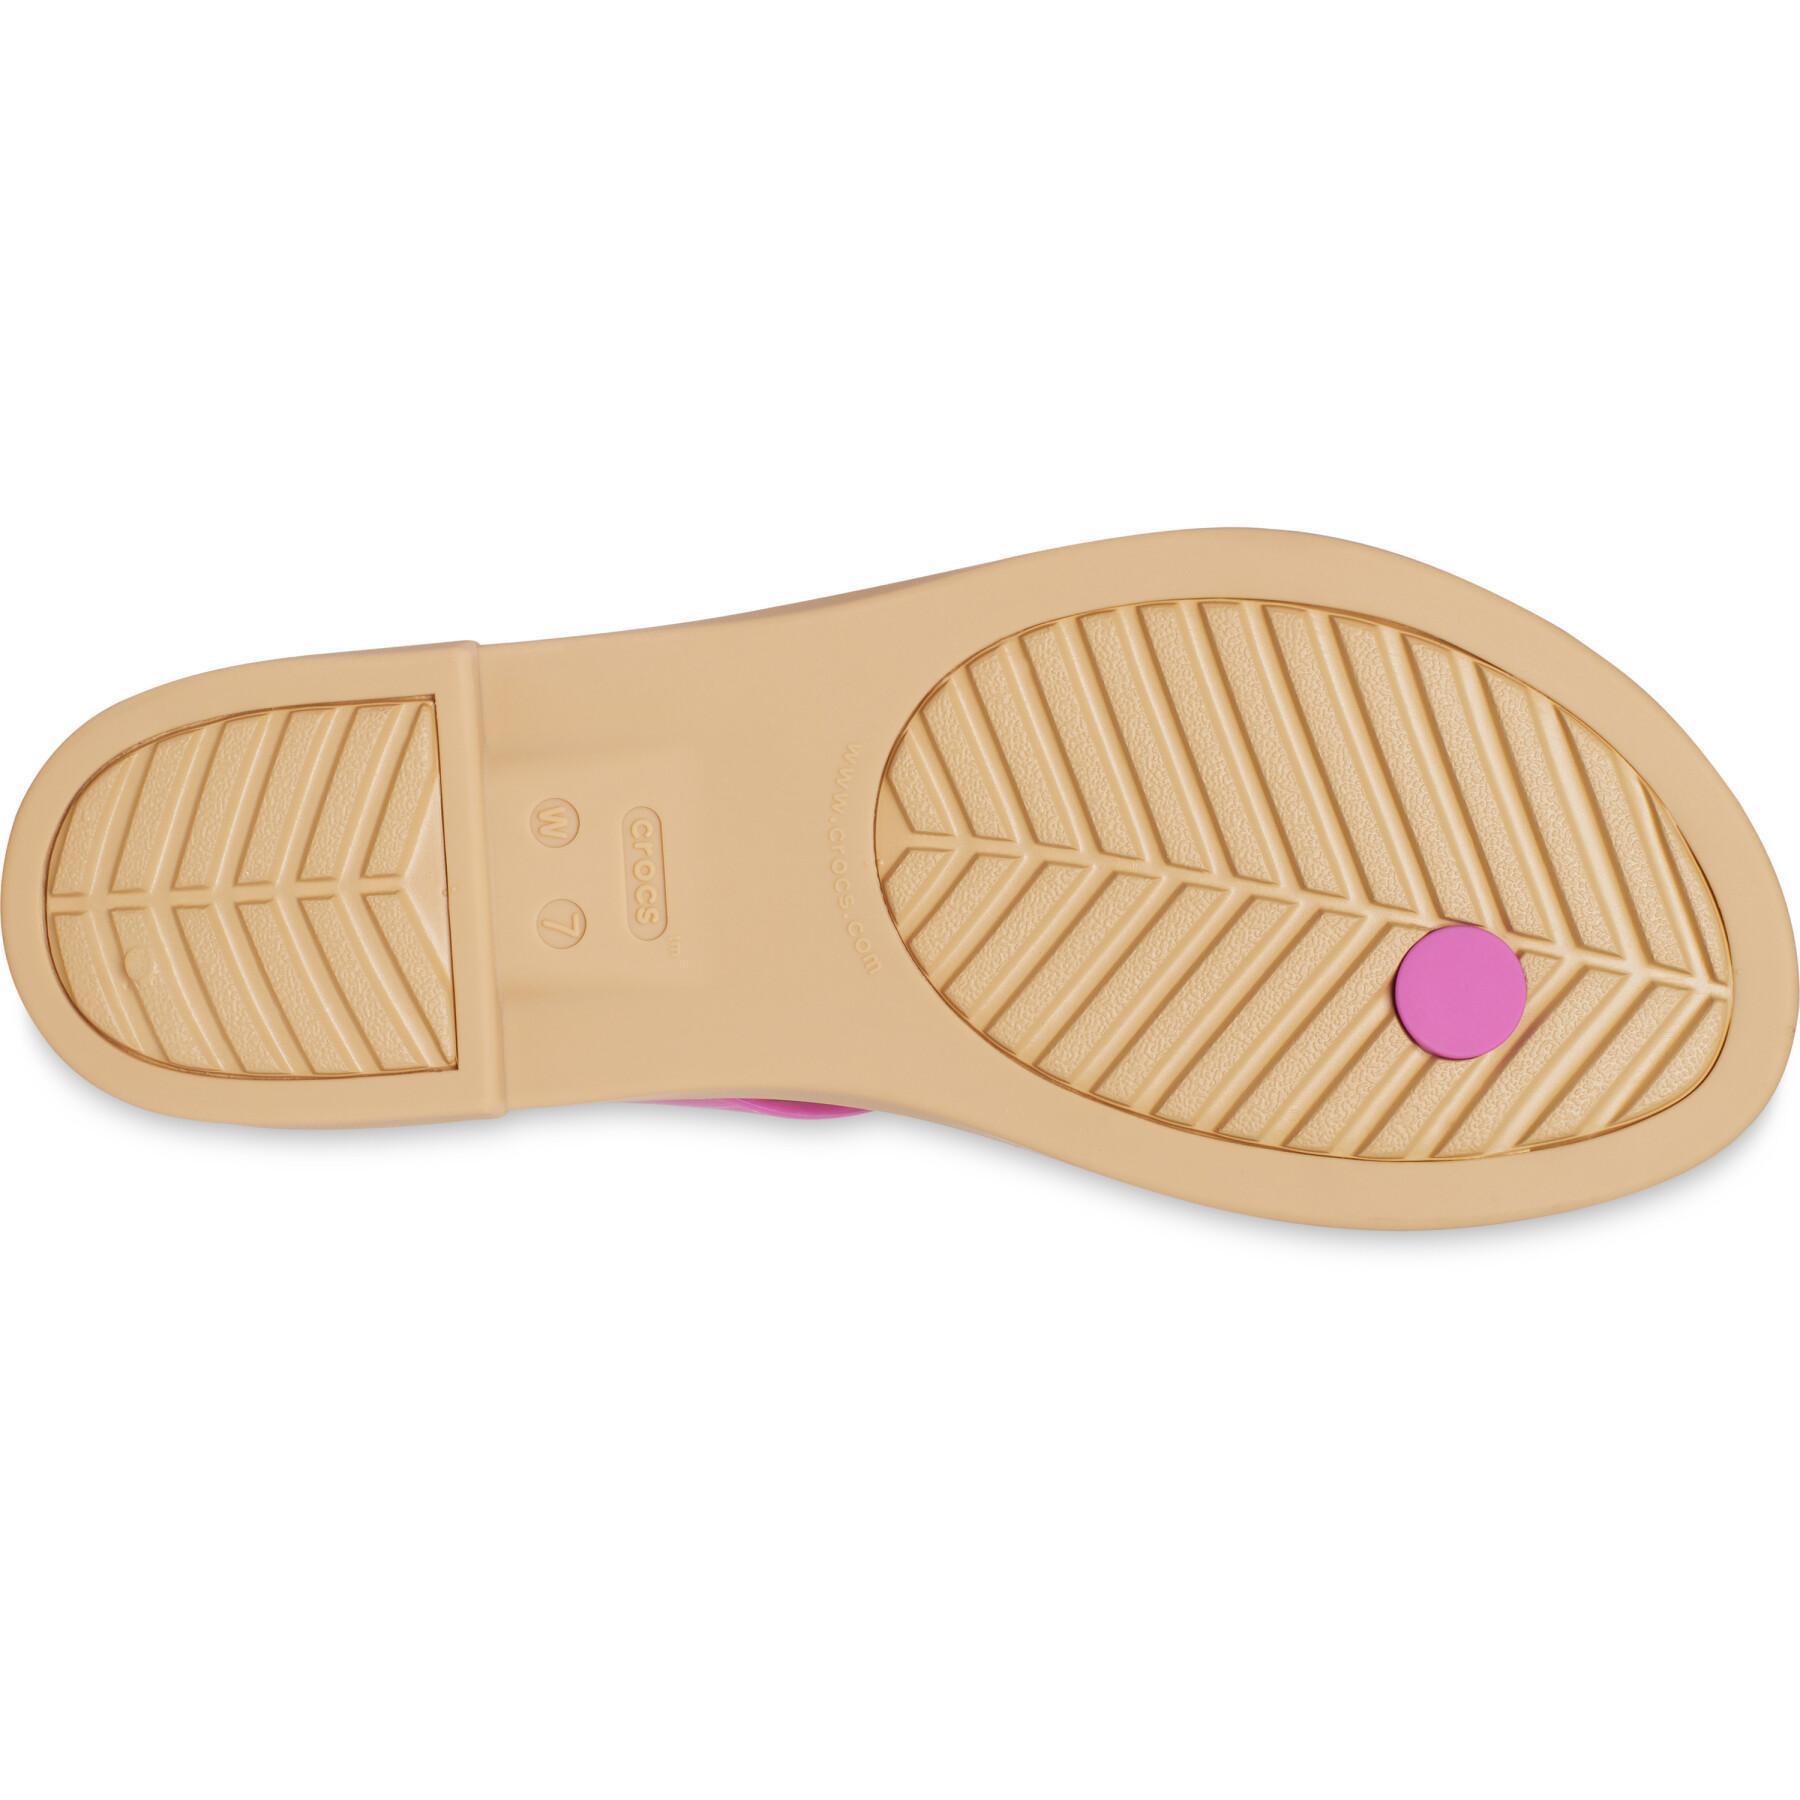 Sandalen für Frauen Crocs tulum toe post